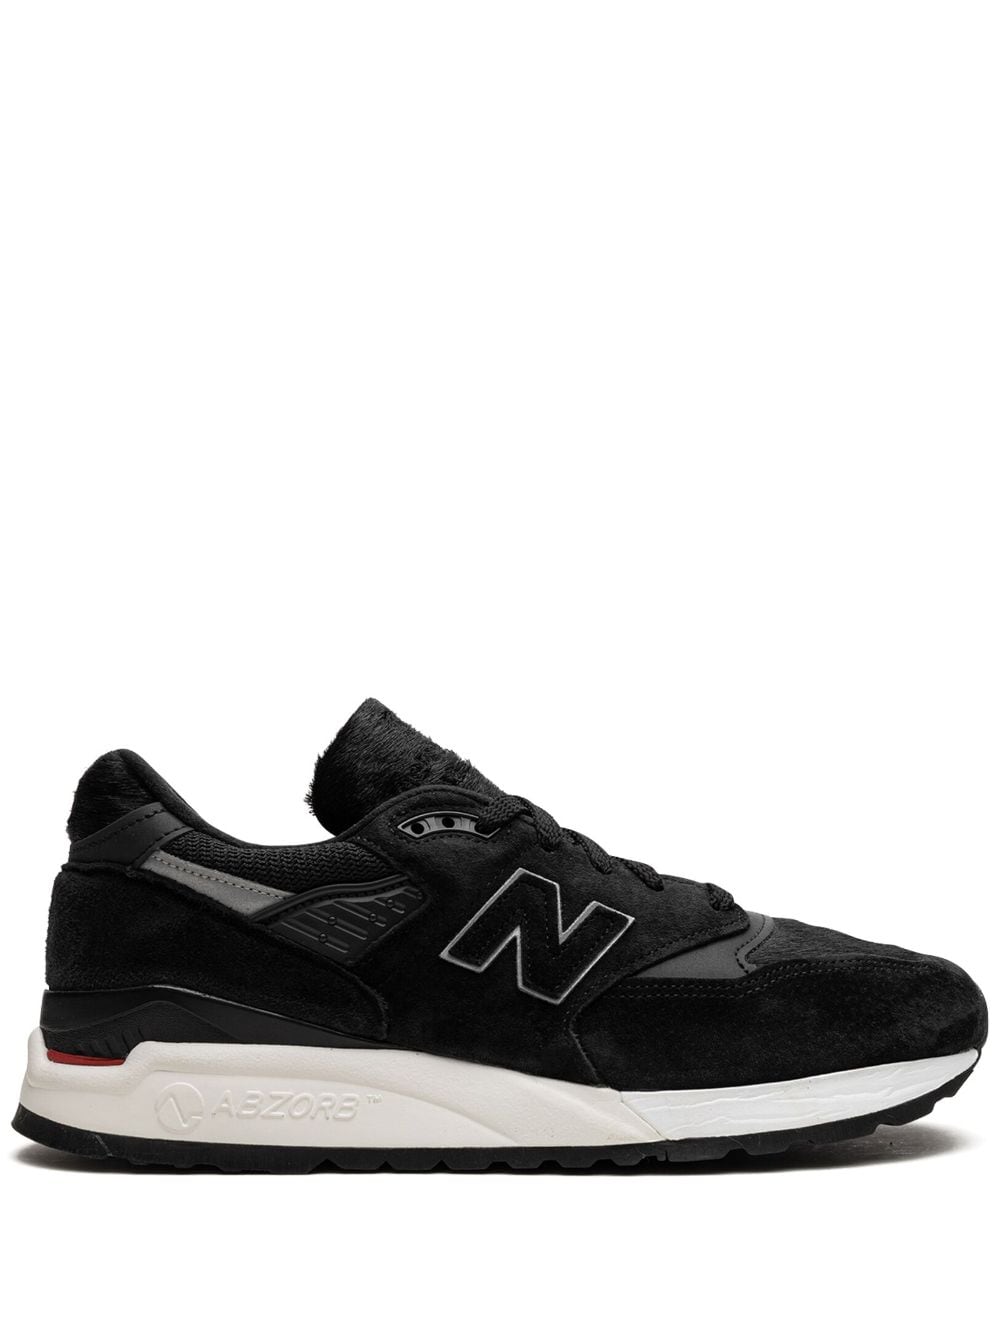 New Balance 998 "Black" sneakers von New Balance